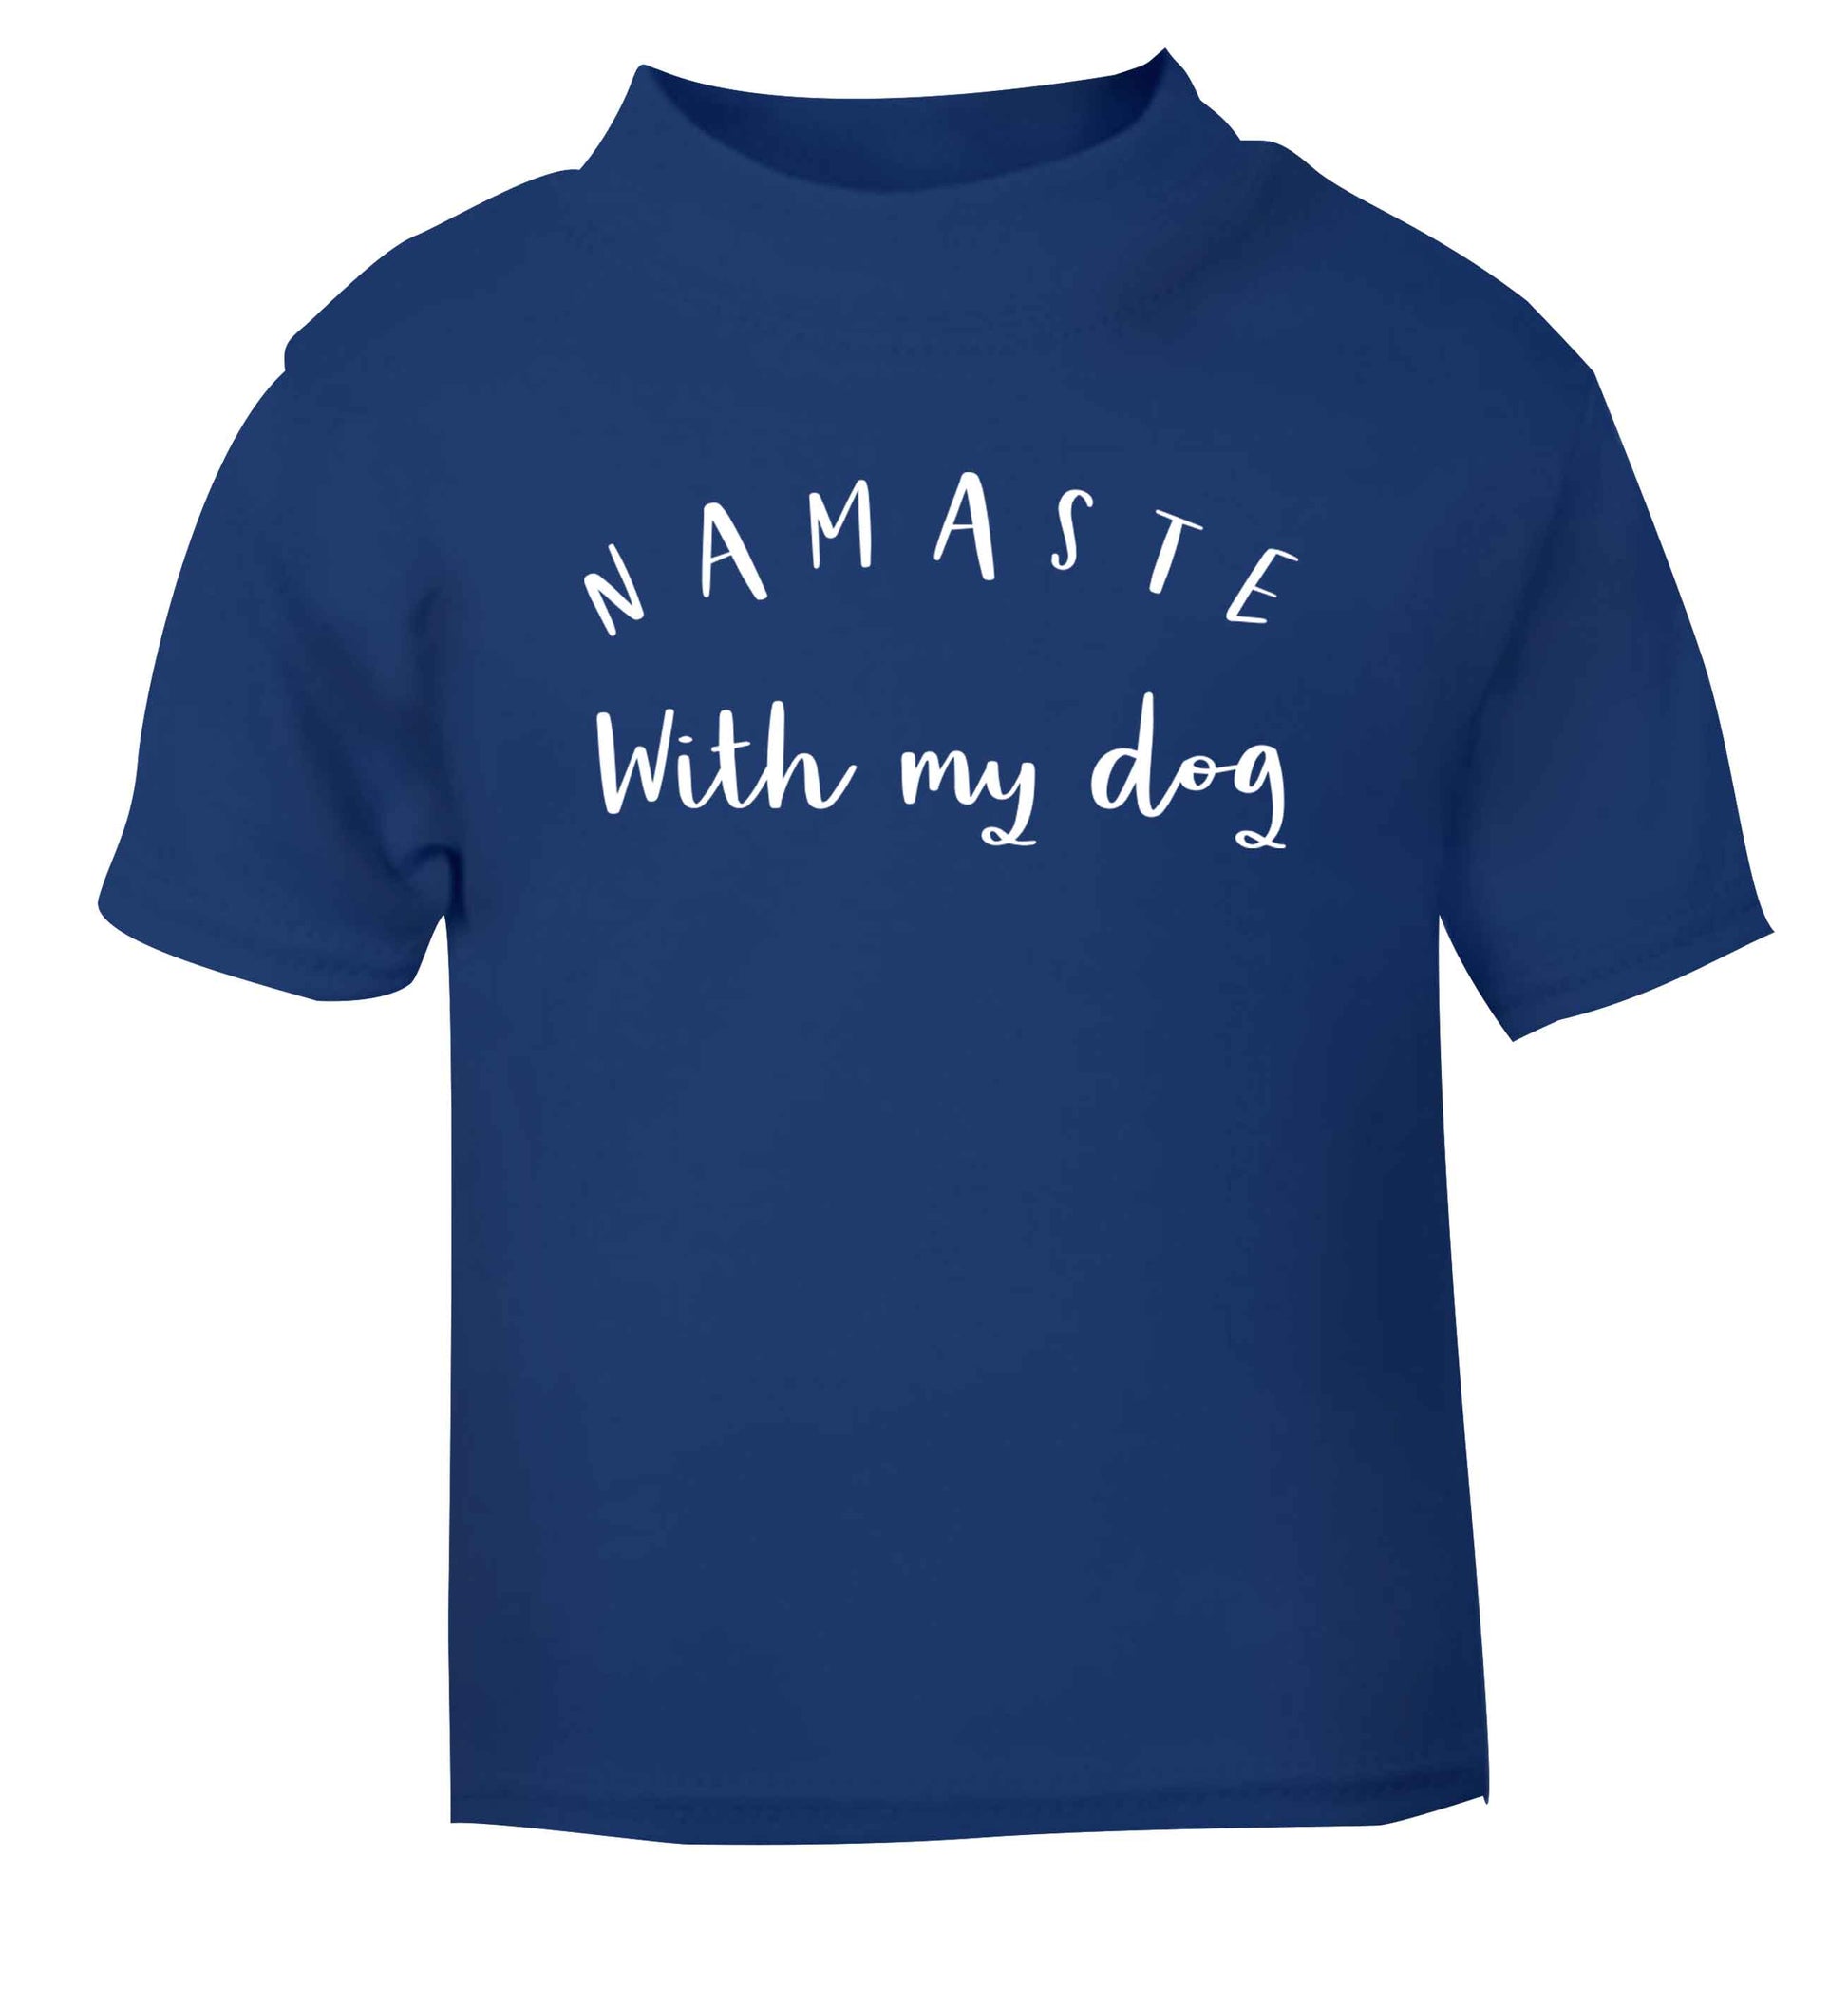 Namaste with my dog blue Baby Toddler Tshirt 2 Years